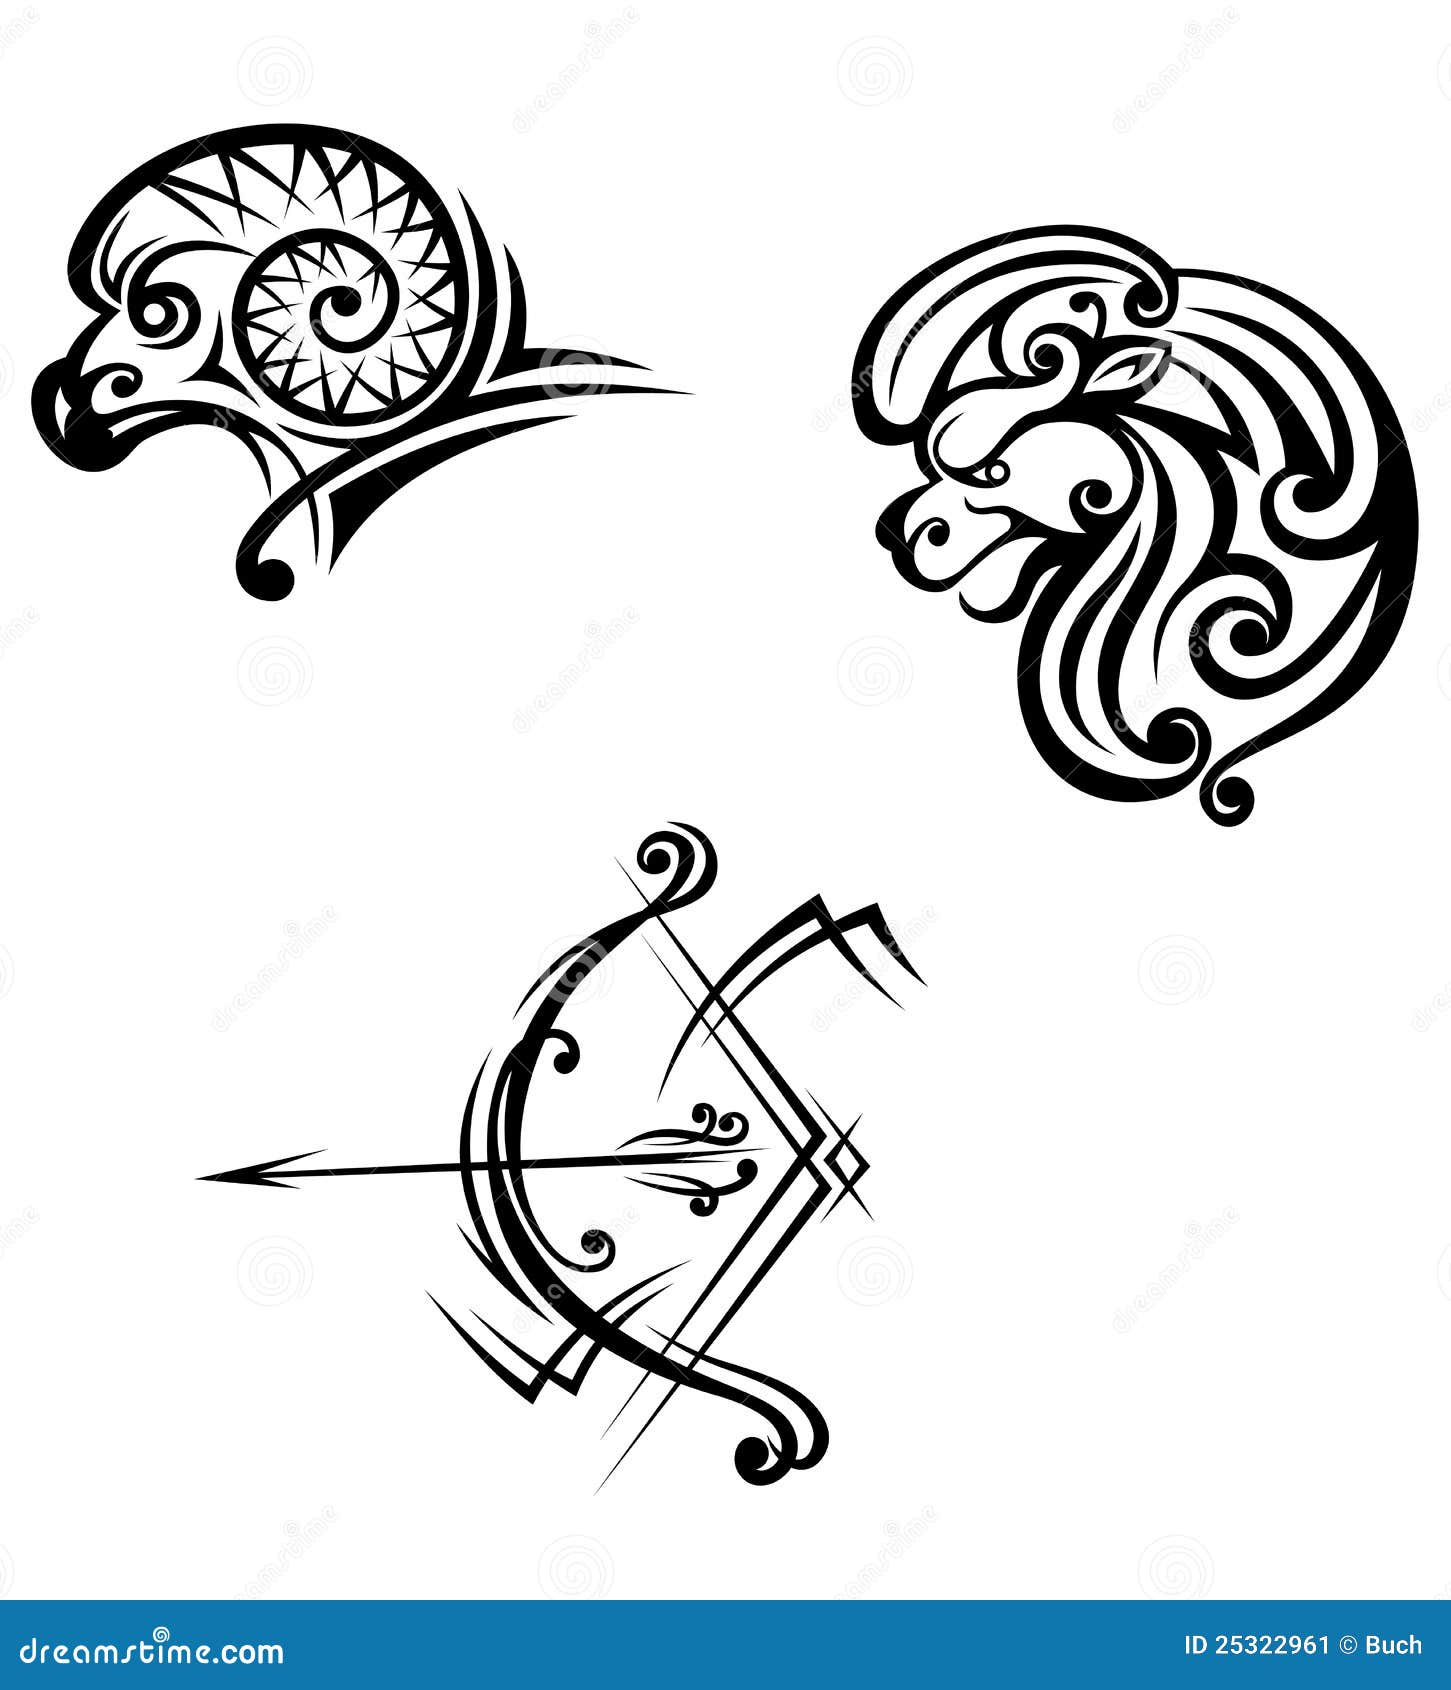 Leo, Aries and Sagittarius Symbols Stock Vector - Illustration of abstract, sign: 25322961